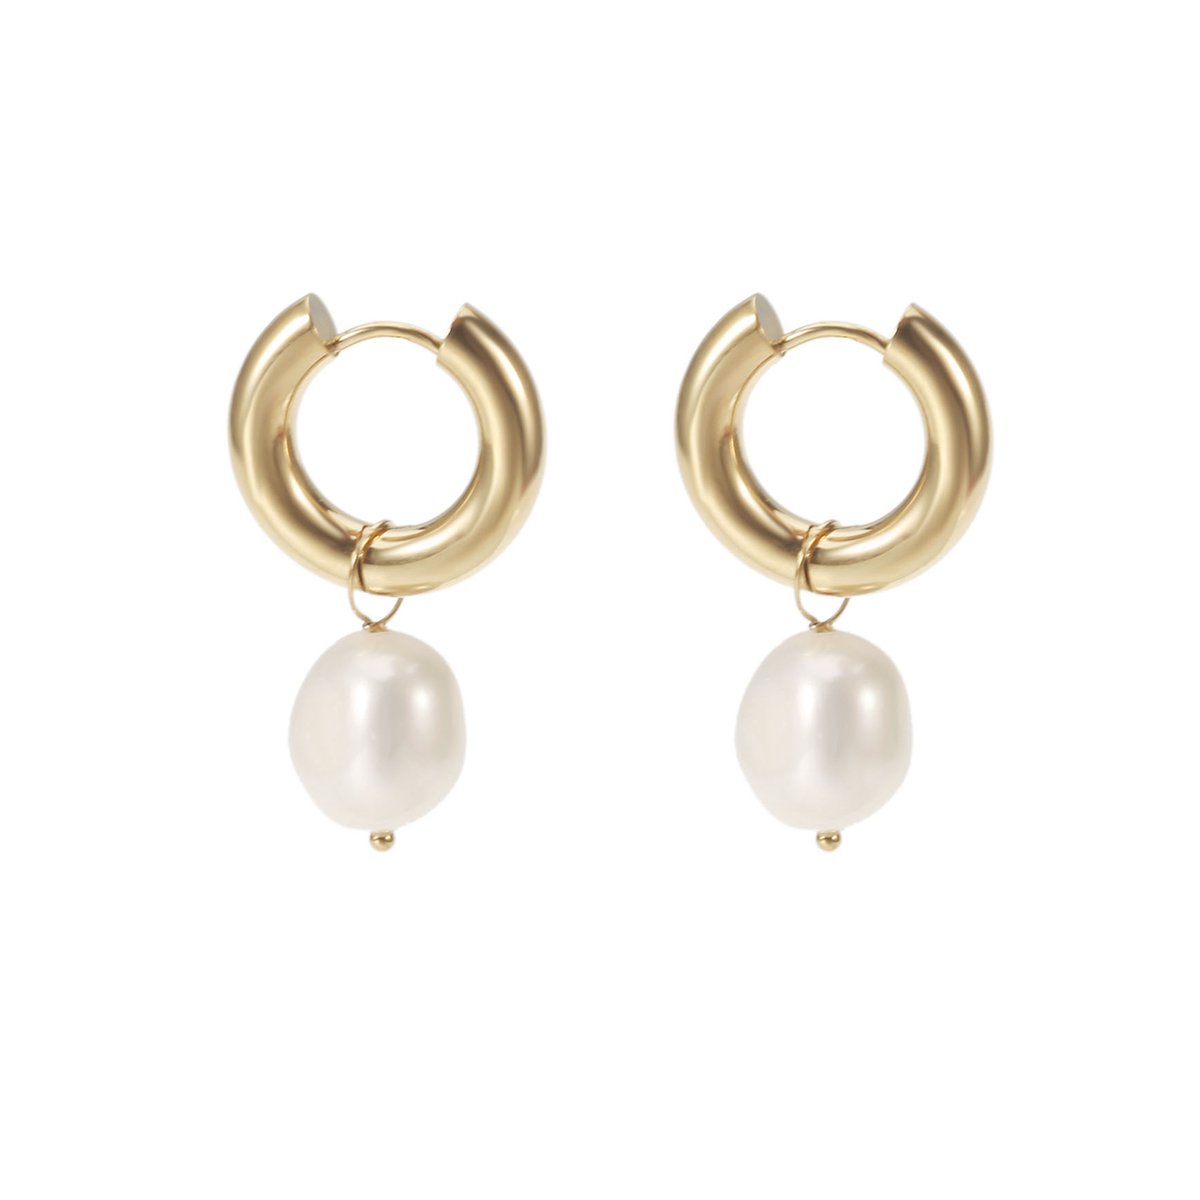 The Jewellery Club - Small pearl earrings gold - Oorbellen - Dames oorbellen - Parel oorbellen - Stainless steel - Hanger - 4 cm - The Jewellery Club